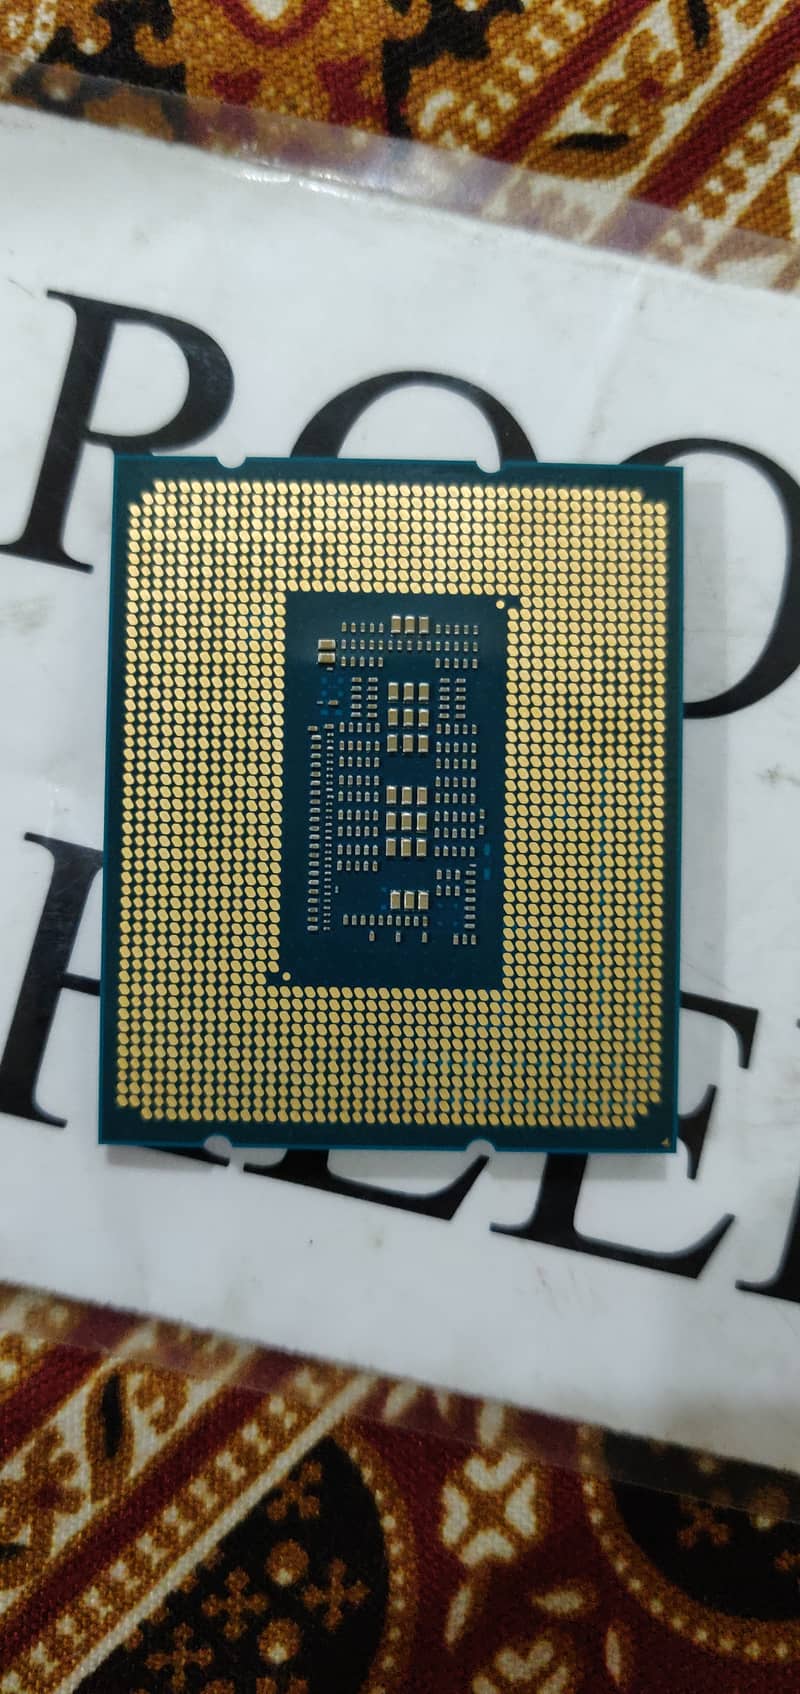 12th gen intel core i5 12600k processor + Gigabyte Z690 UD AX board 12